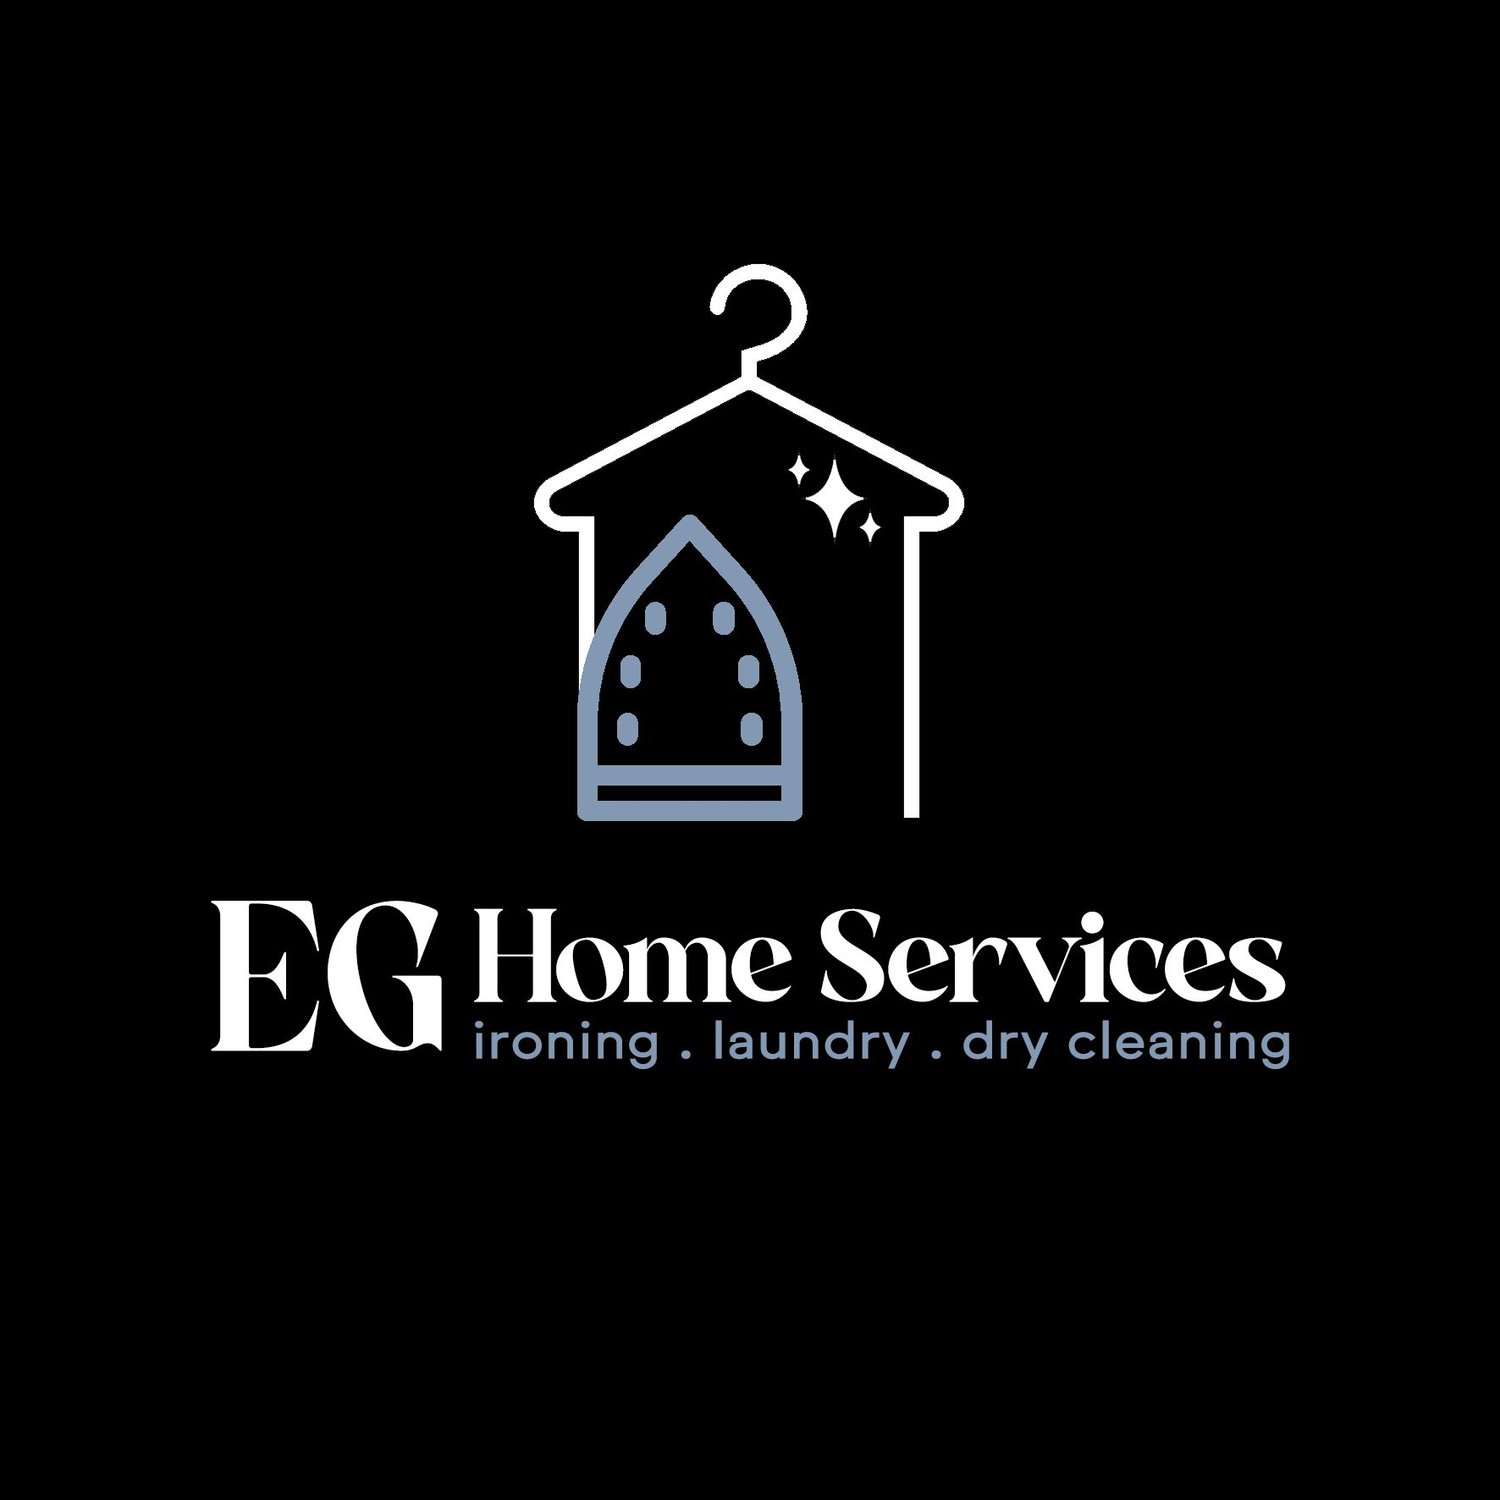 EG Home Services